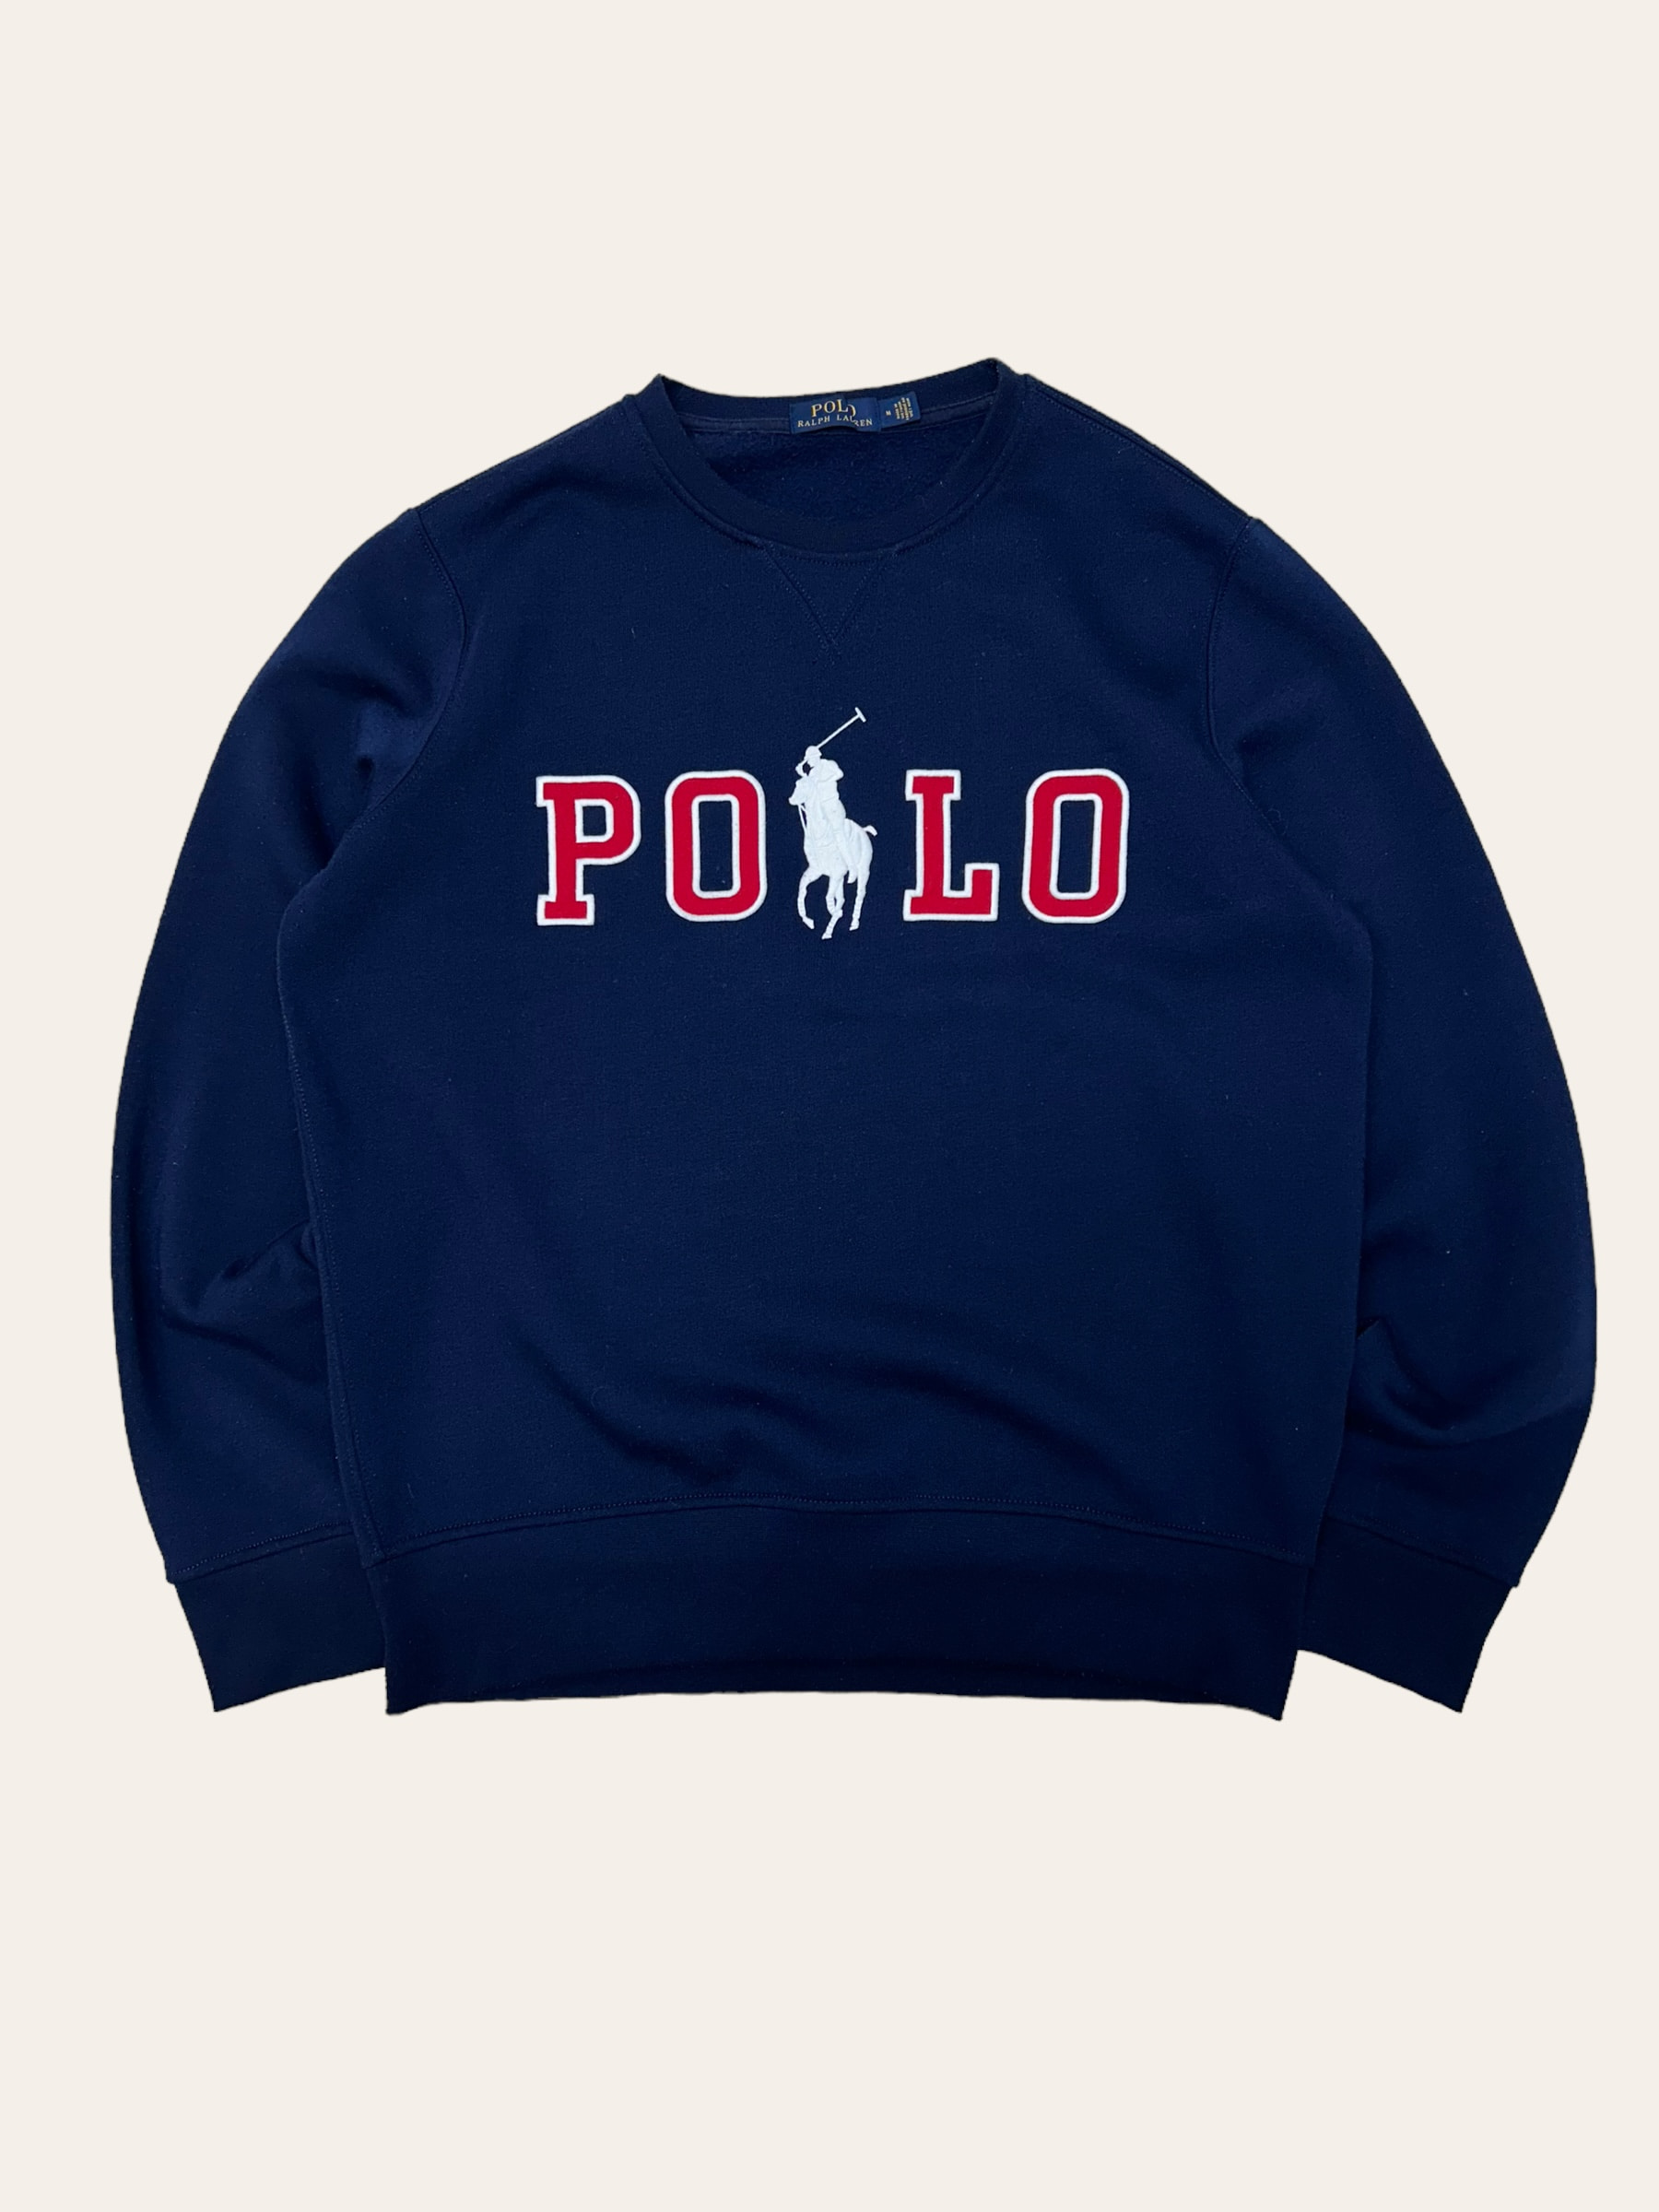 Polo ralph lauren navy spell out big pony sweatshirt M